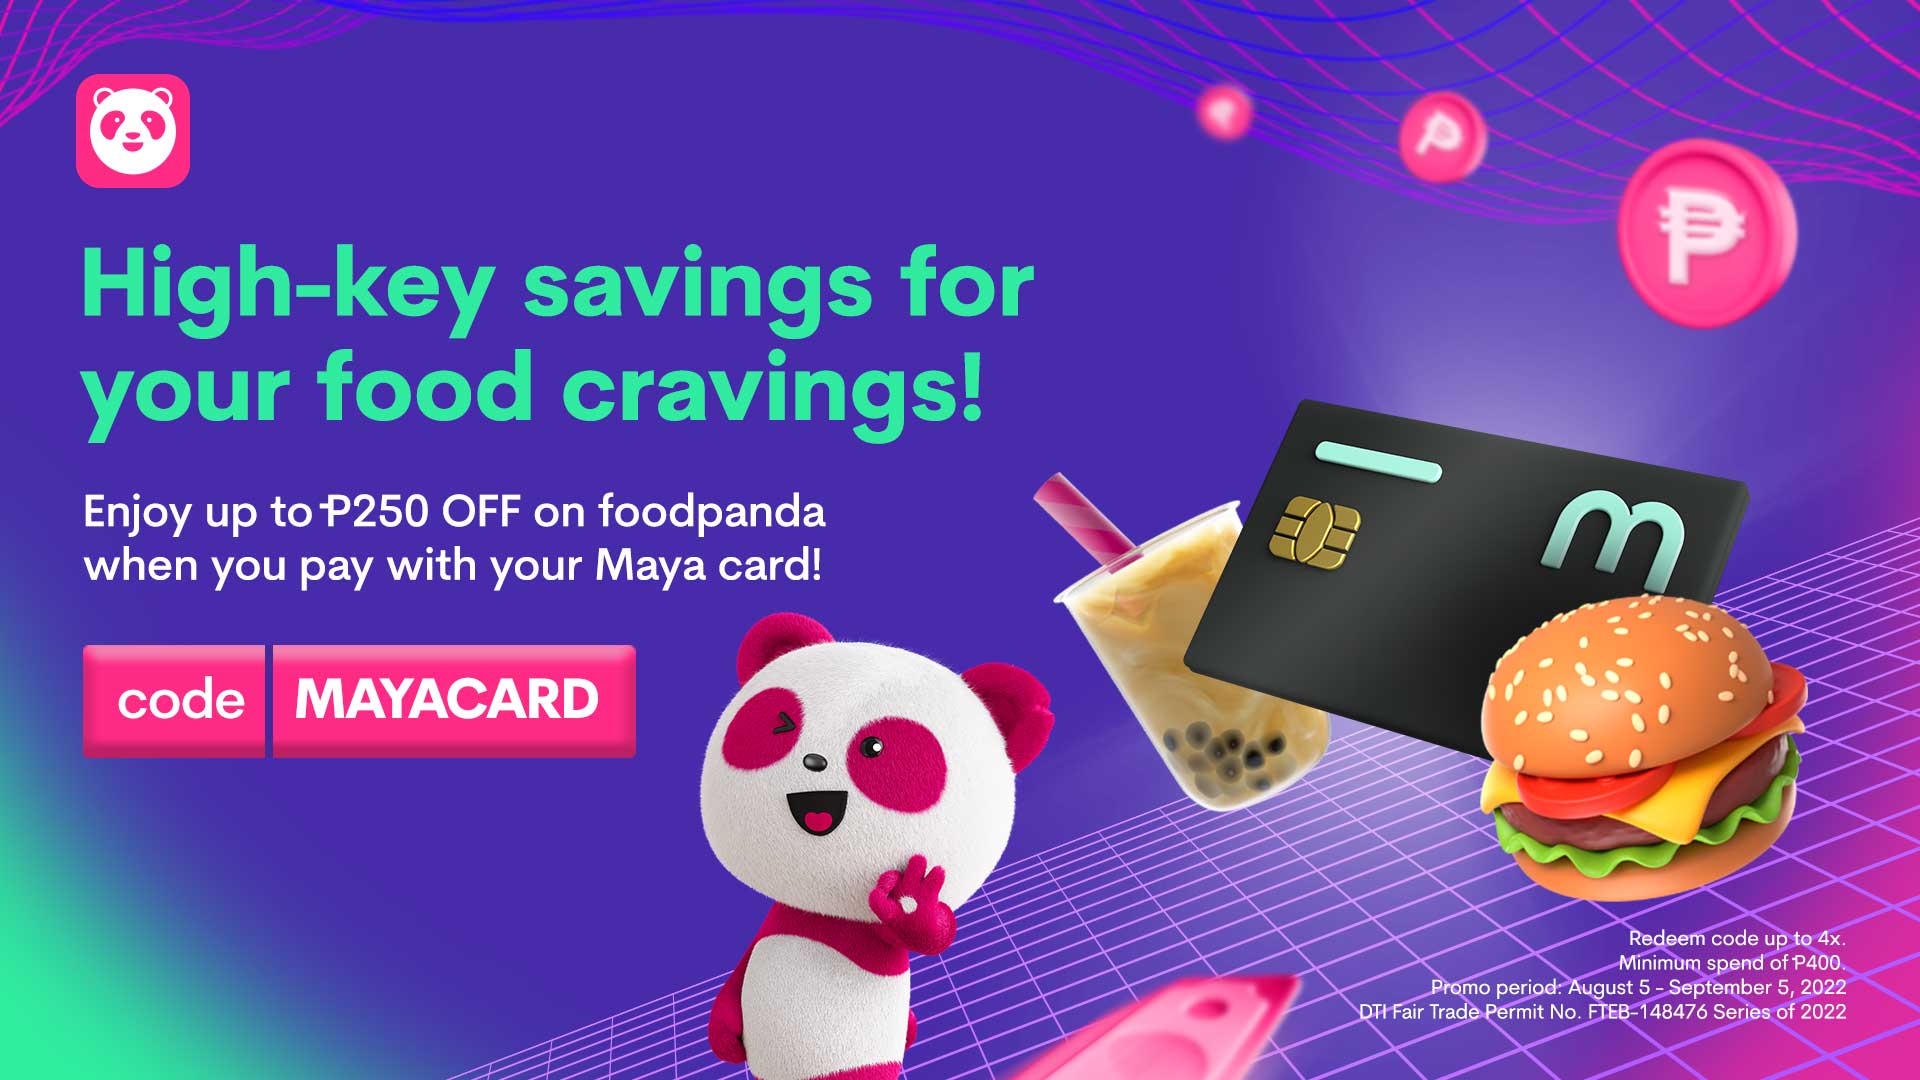 Enjoy discounts on foodpanda with your Maya card!